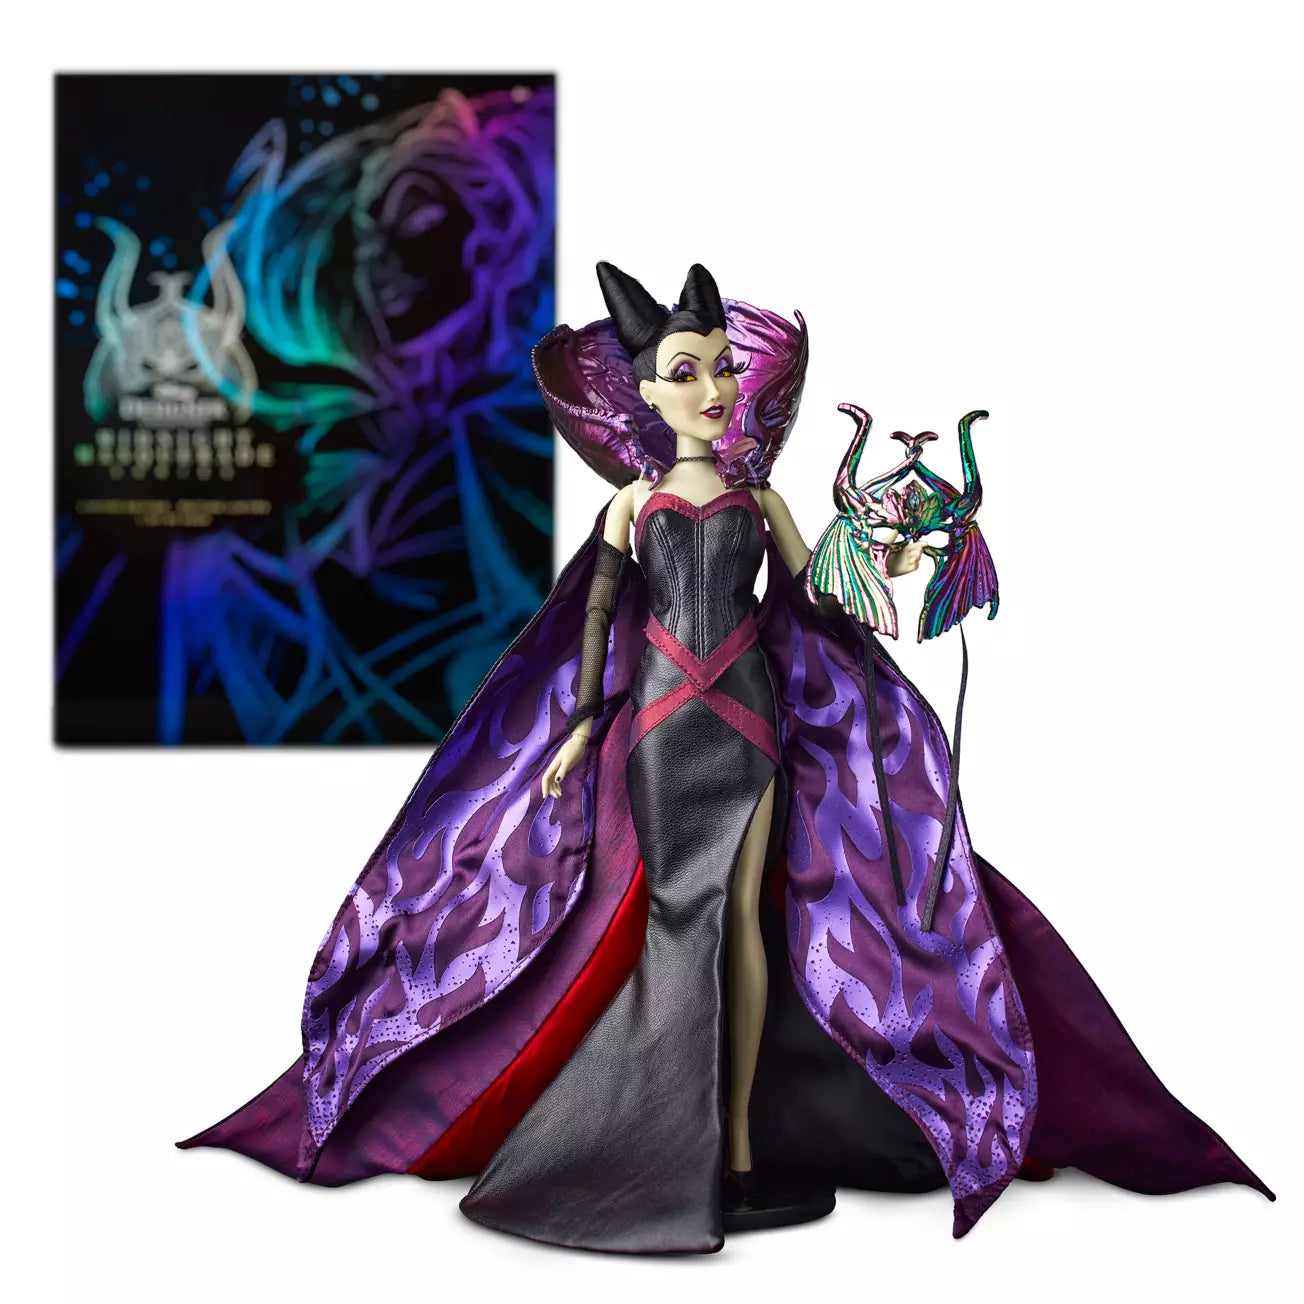 Disney Designer Collection Midnight Masquerade Series Evil Queen Doll